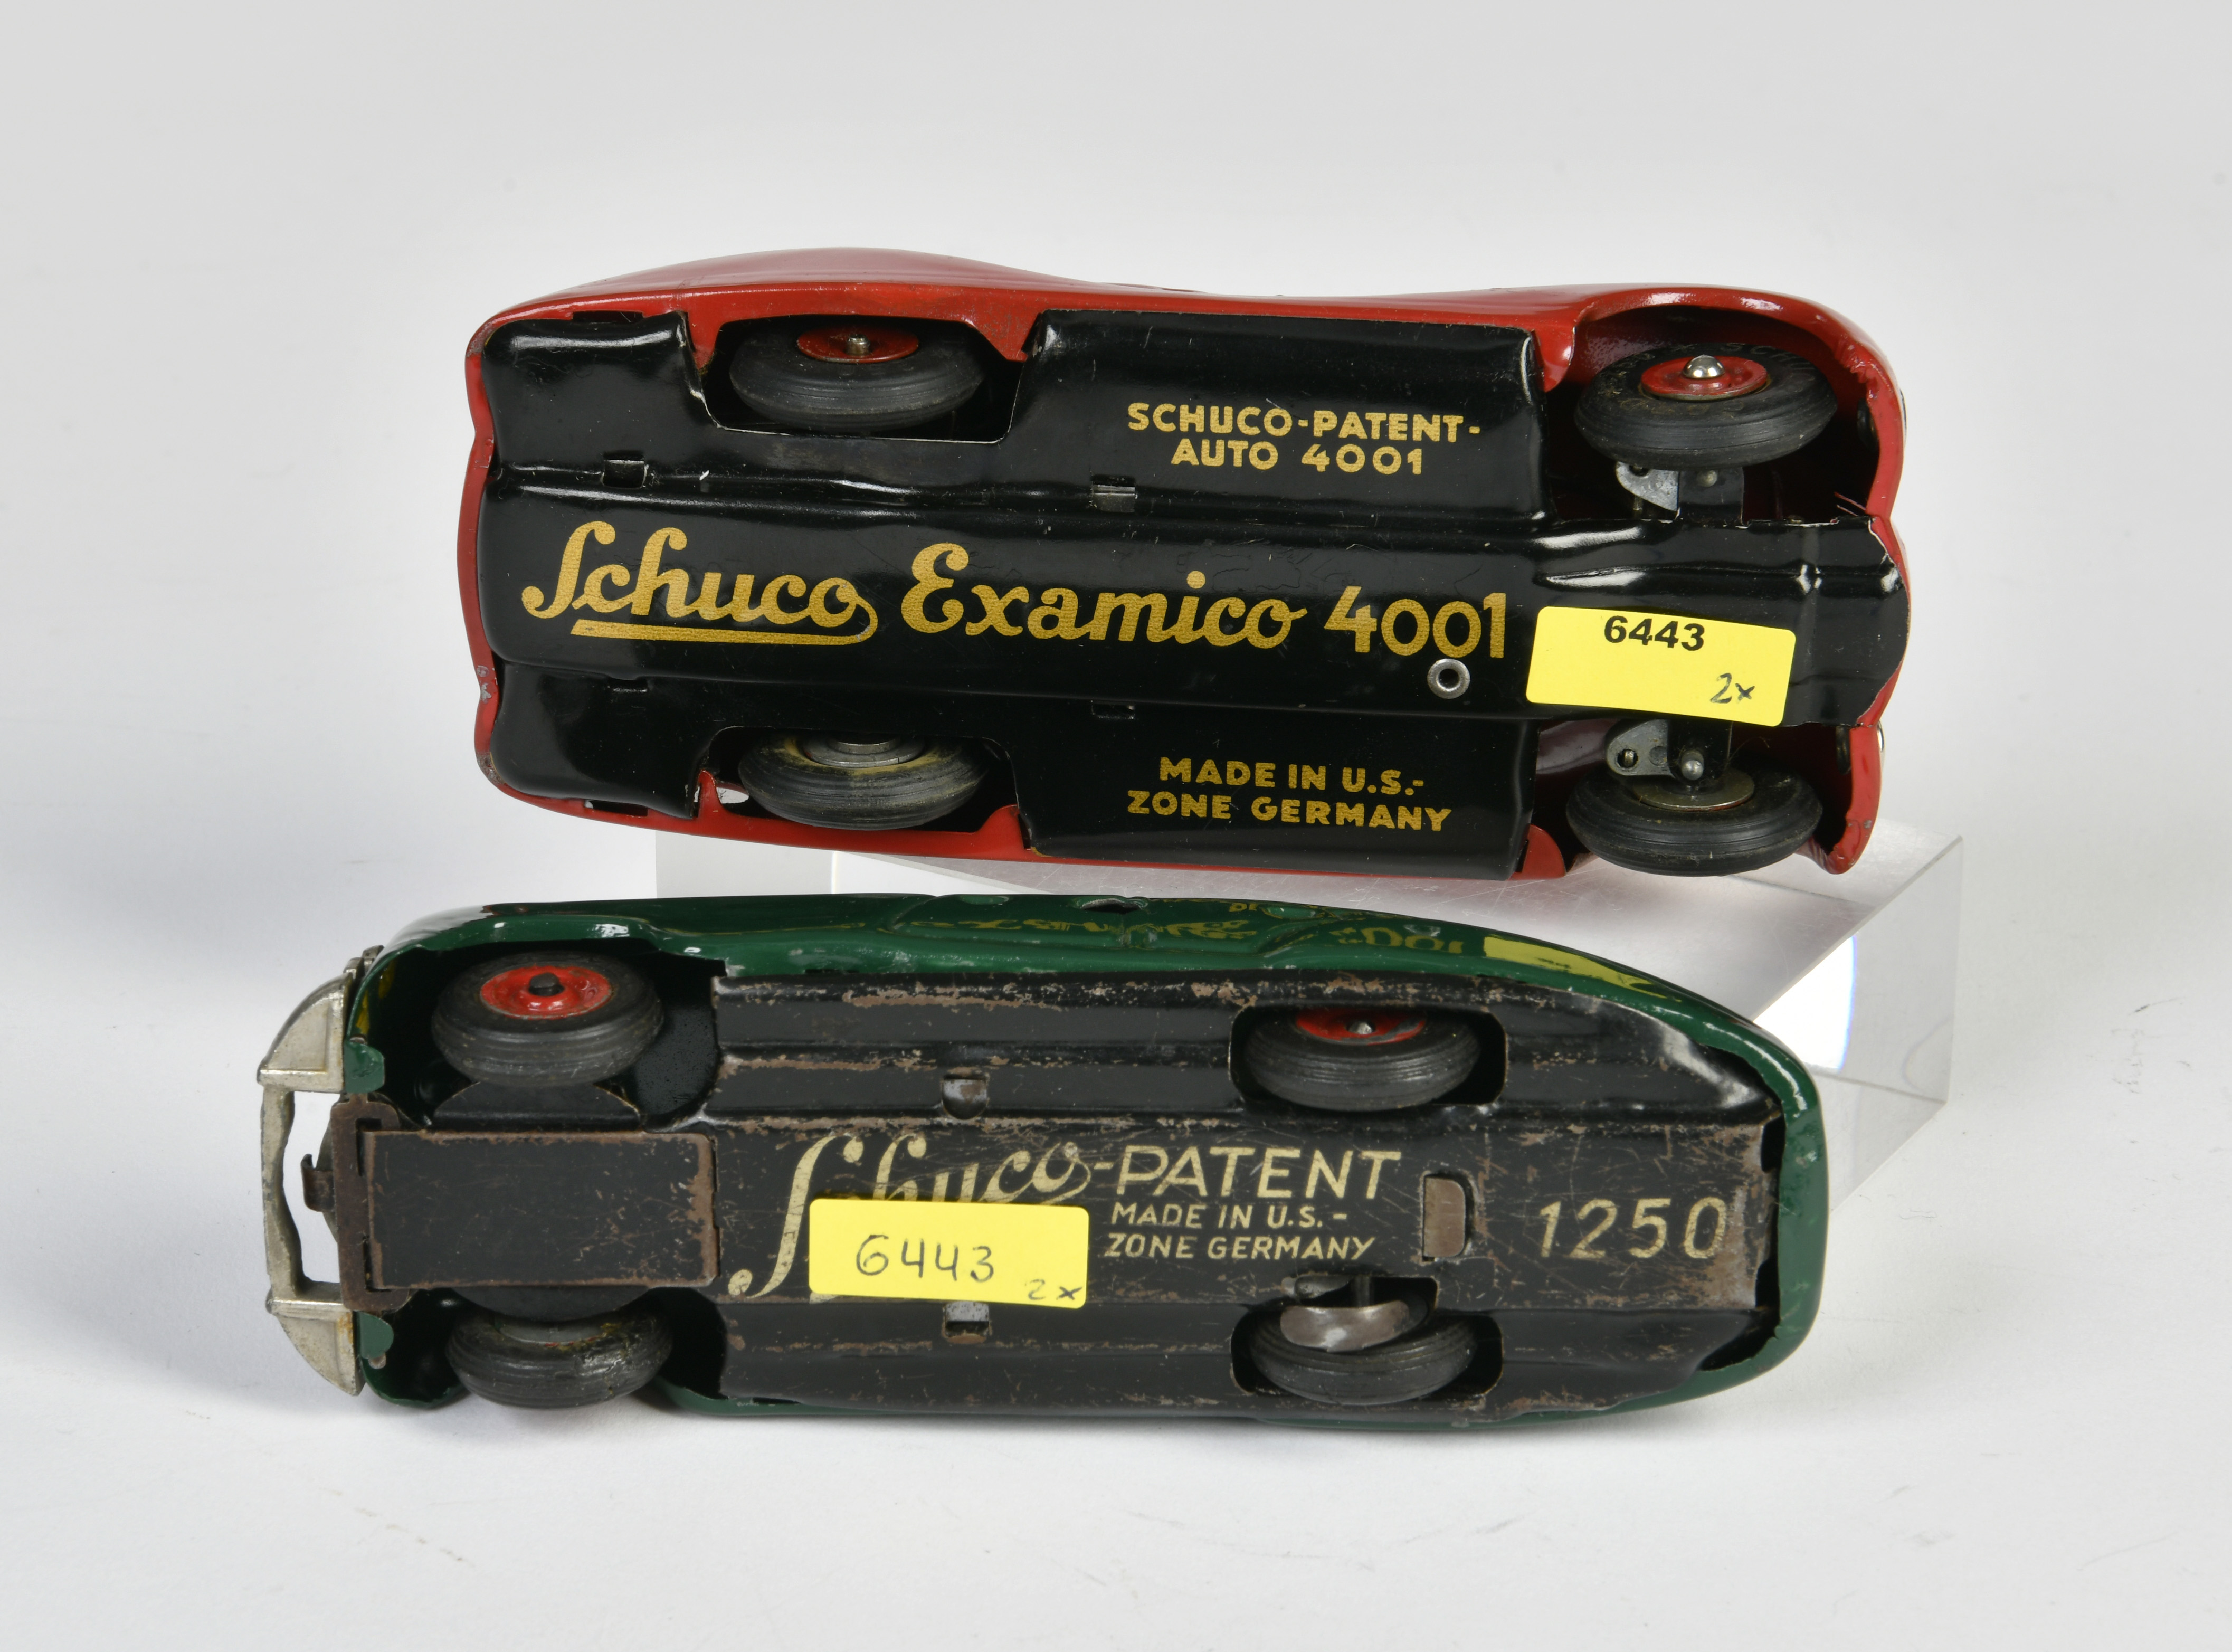 Schuco, Patentauto 1250 & Examico 4001, US Z.-Germany, tin, cw ok, min. paint d., C 1-2 - Image 3 of 3